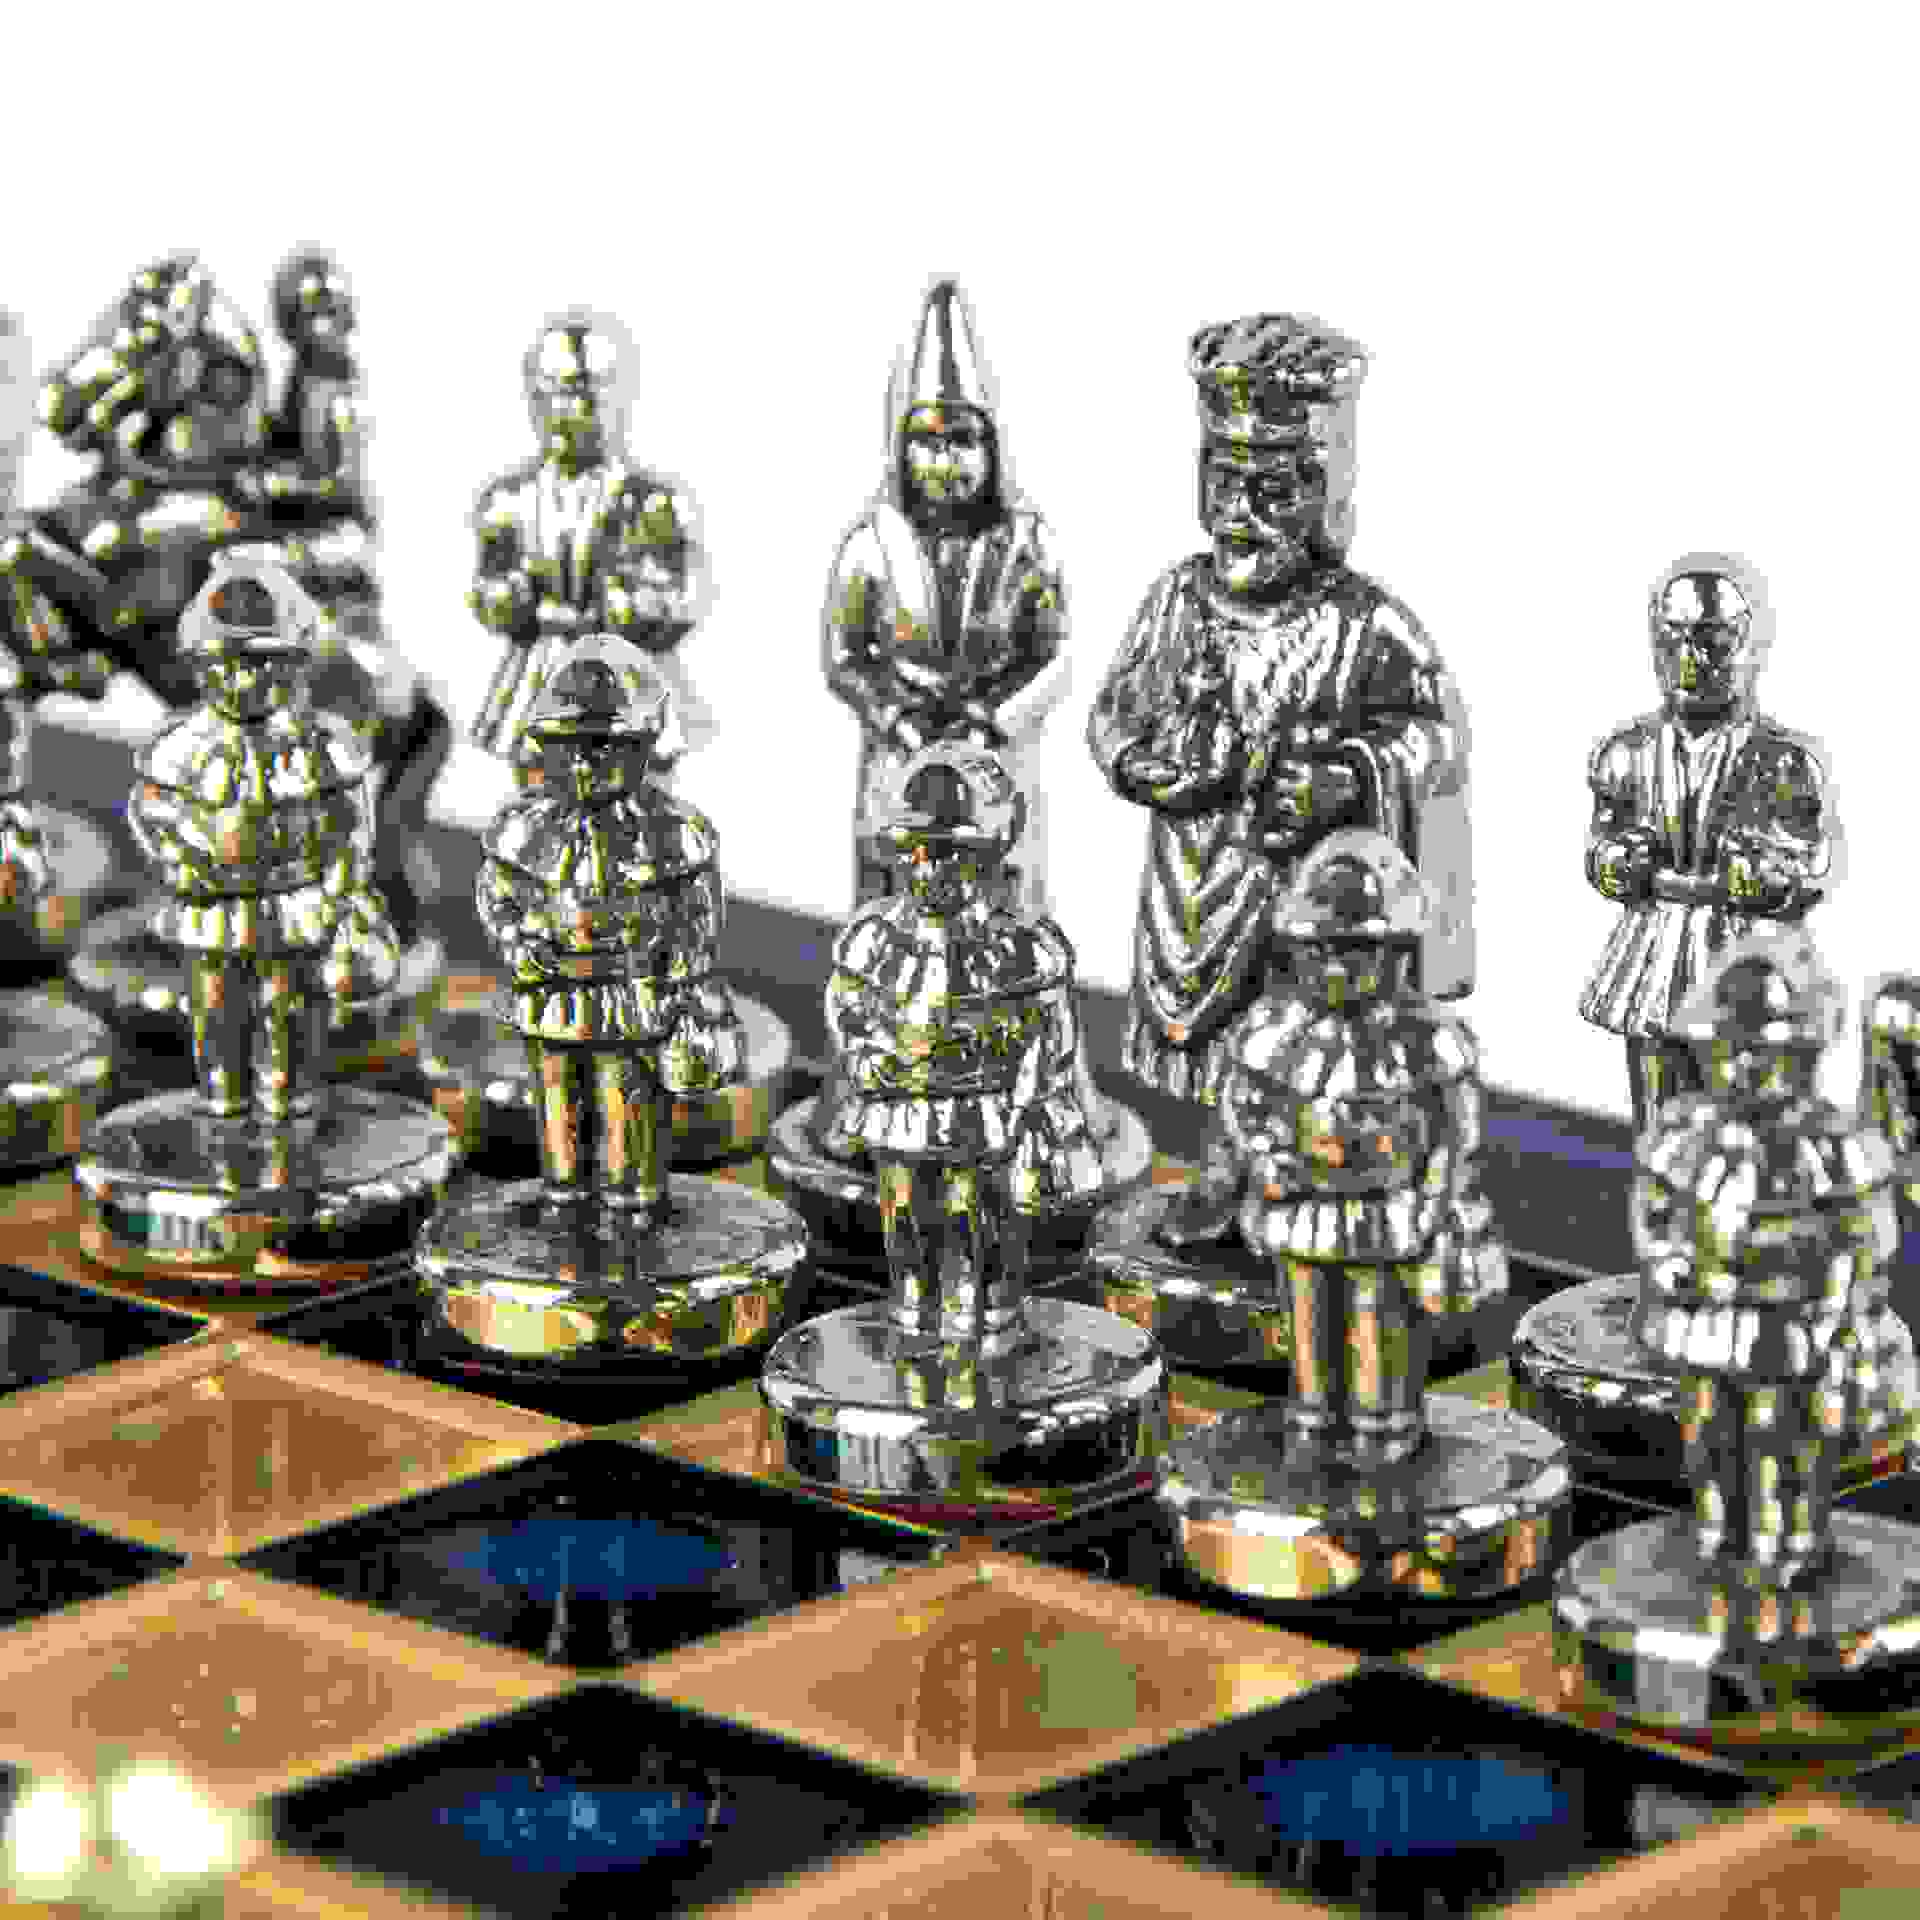 Byzantine Metal Chess Set 20x20cm Blue